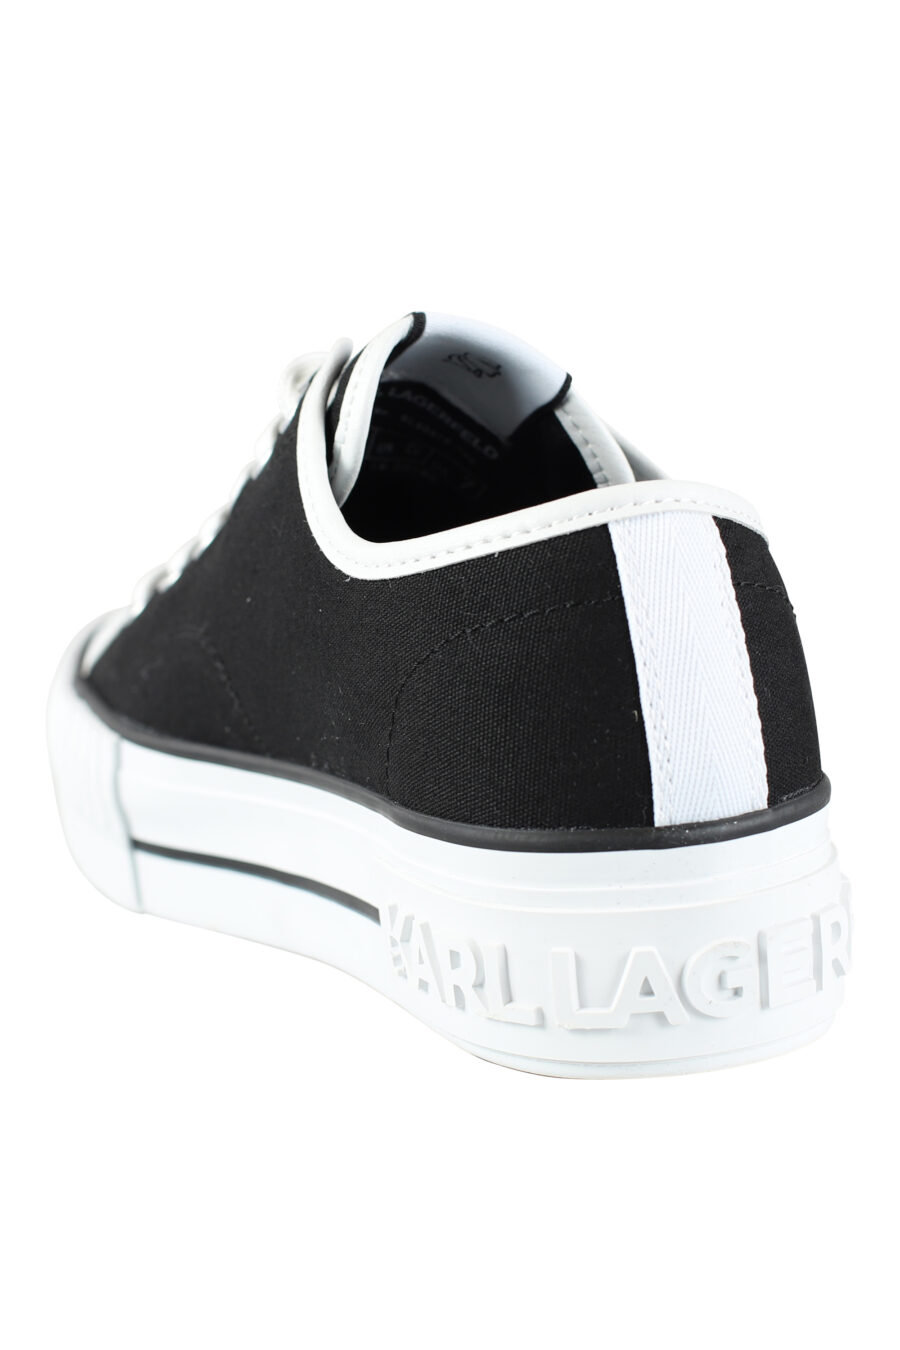 Zapatillas negras estilo converse con logo "karl" en goma - IMG 9578